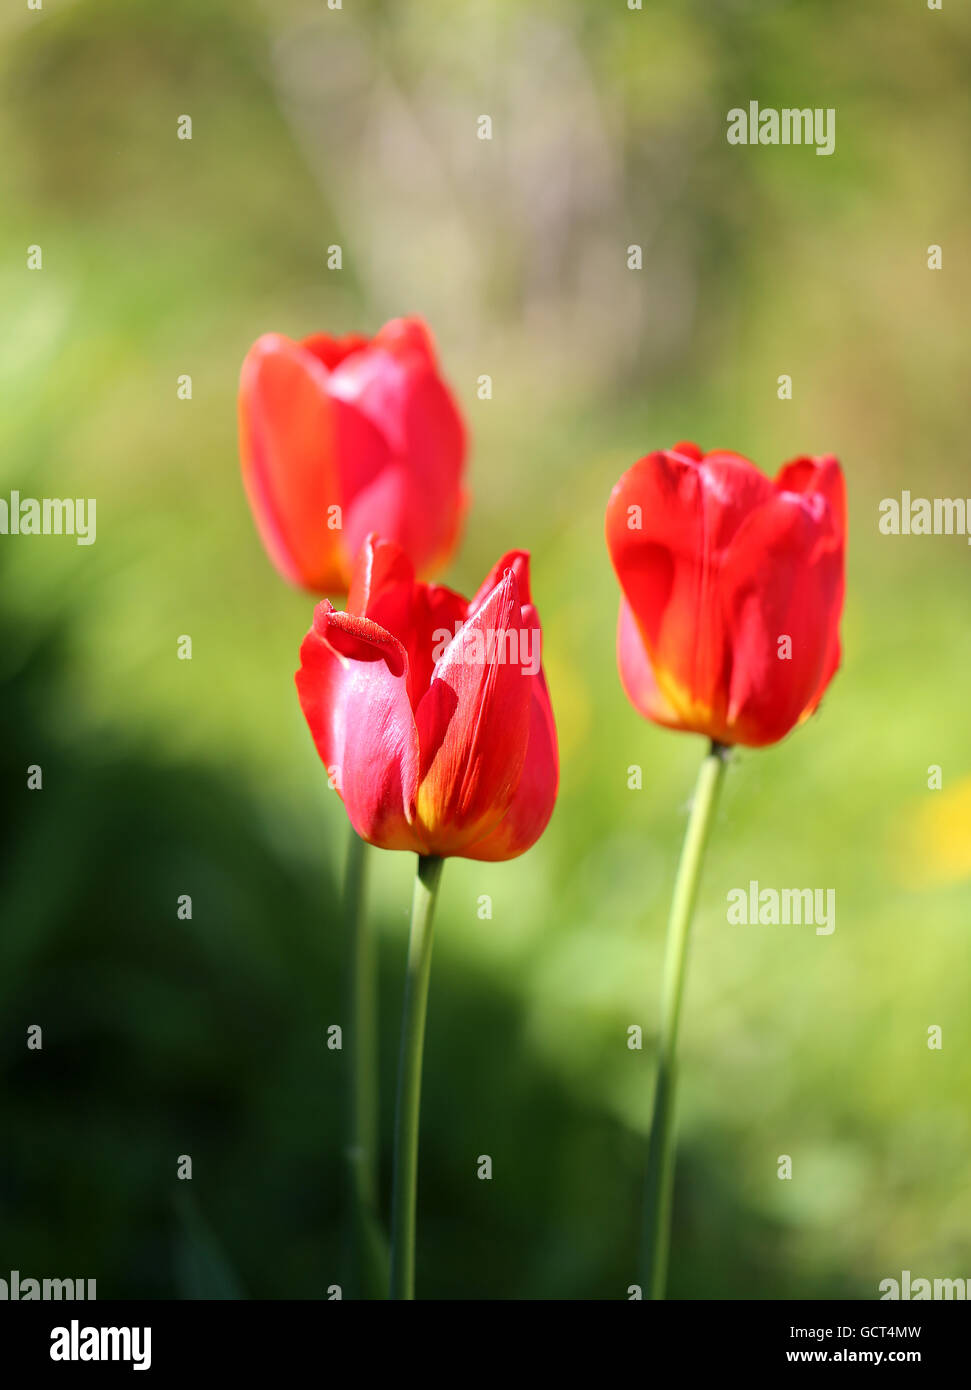 Schöne rote Blumen Tulpen in Nahaufnahme fotografiert Stockfoto